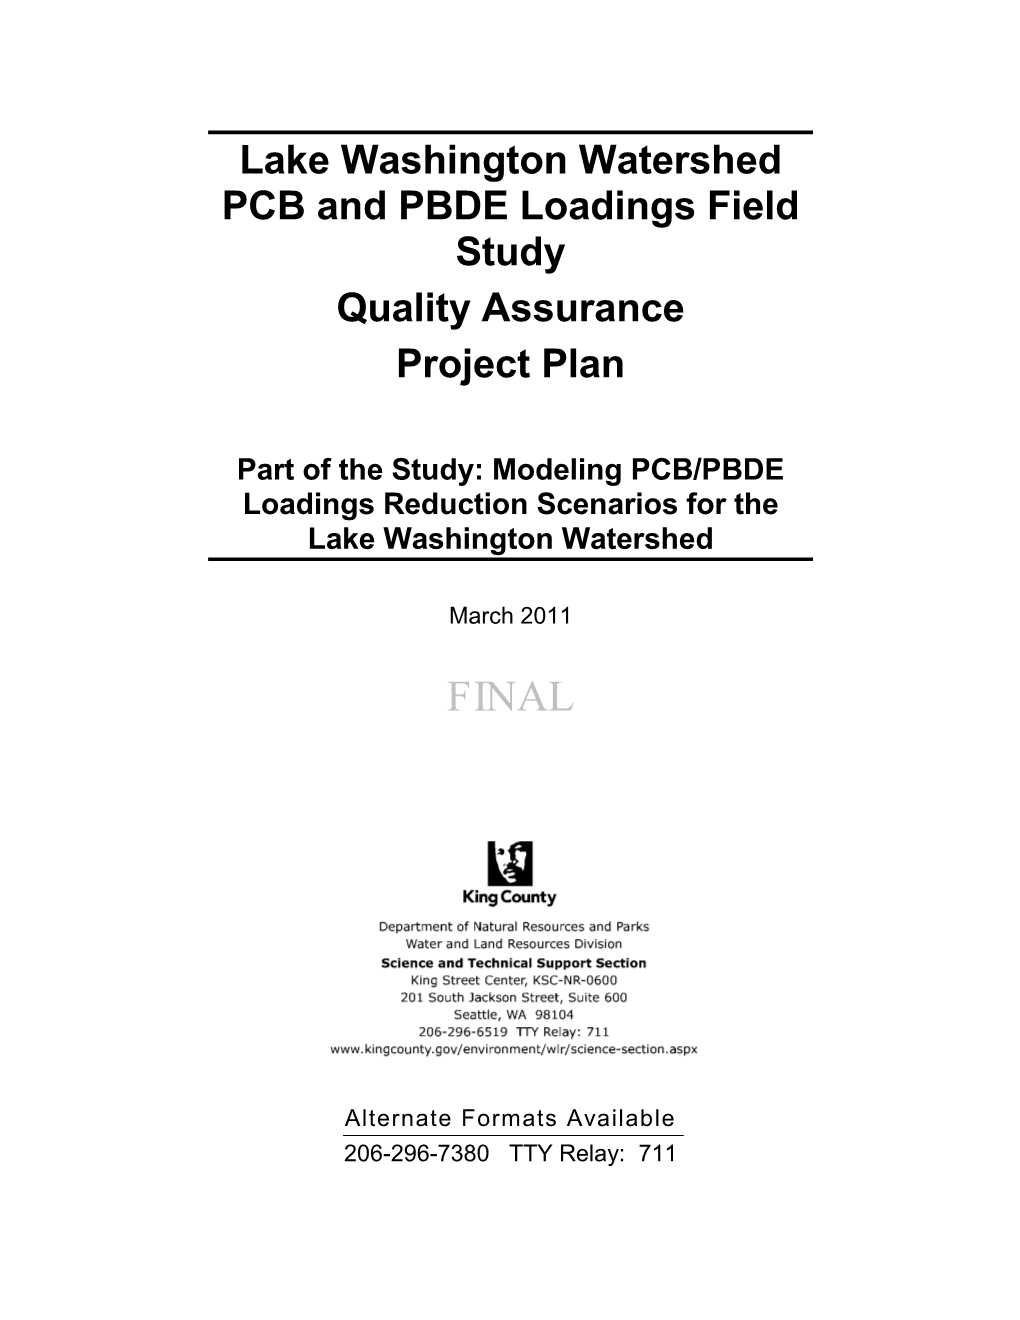 Lake Washington Watershed PCB and PBDE Loadings Field Study And